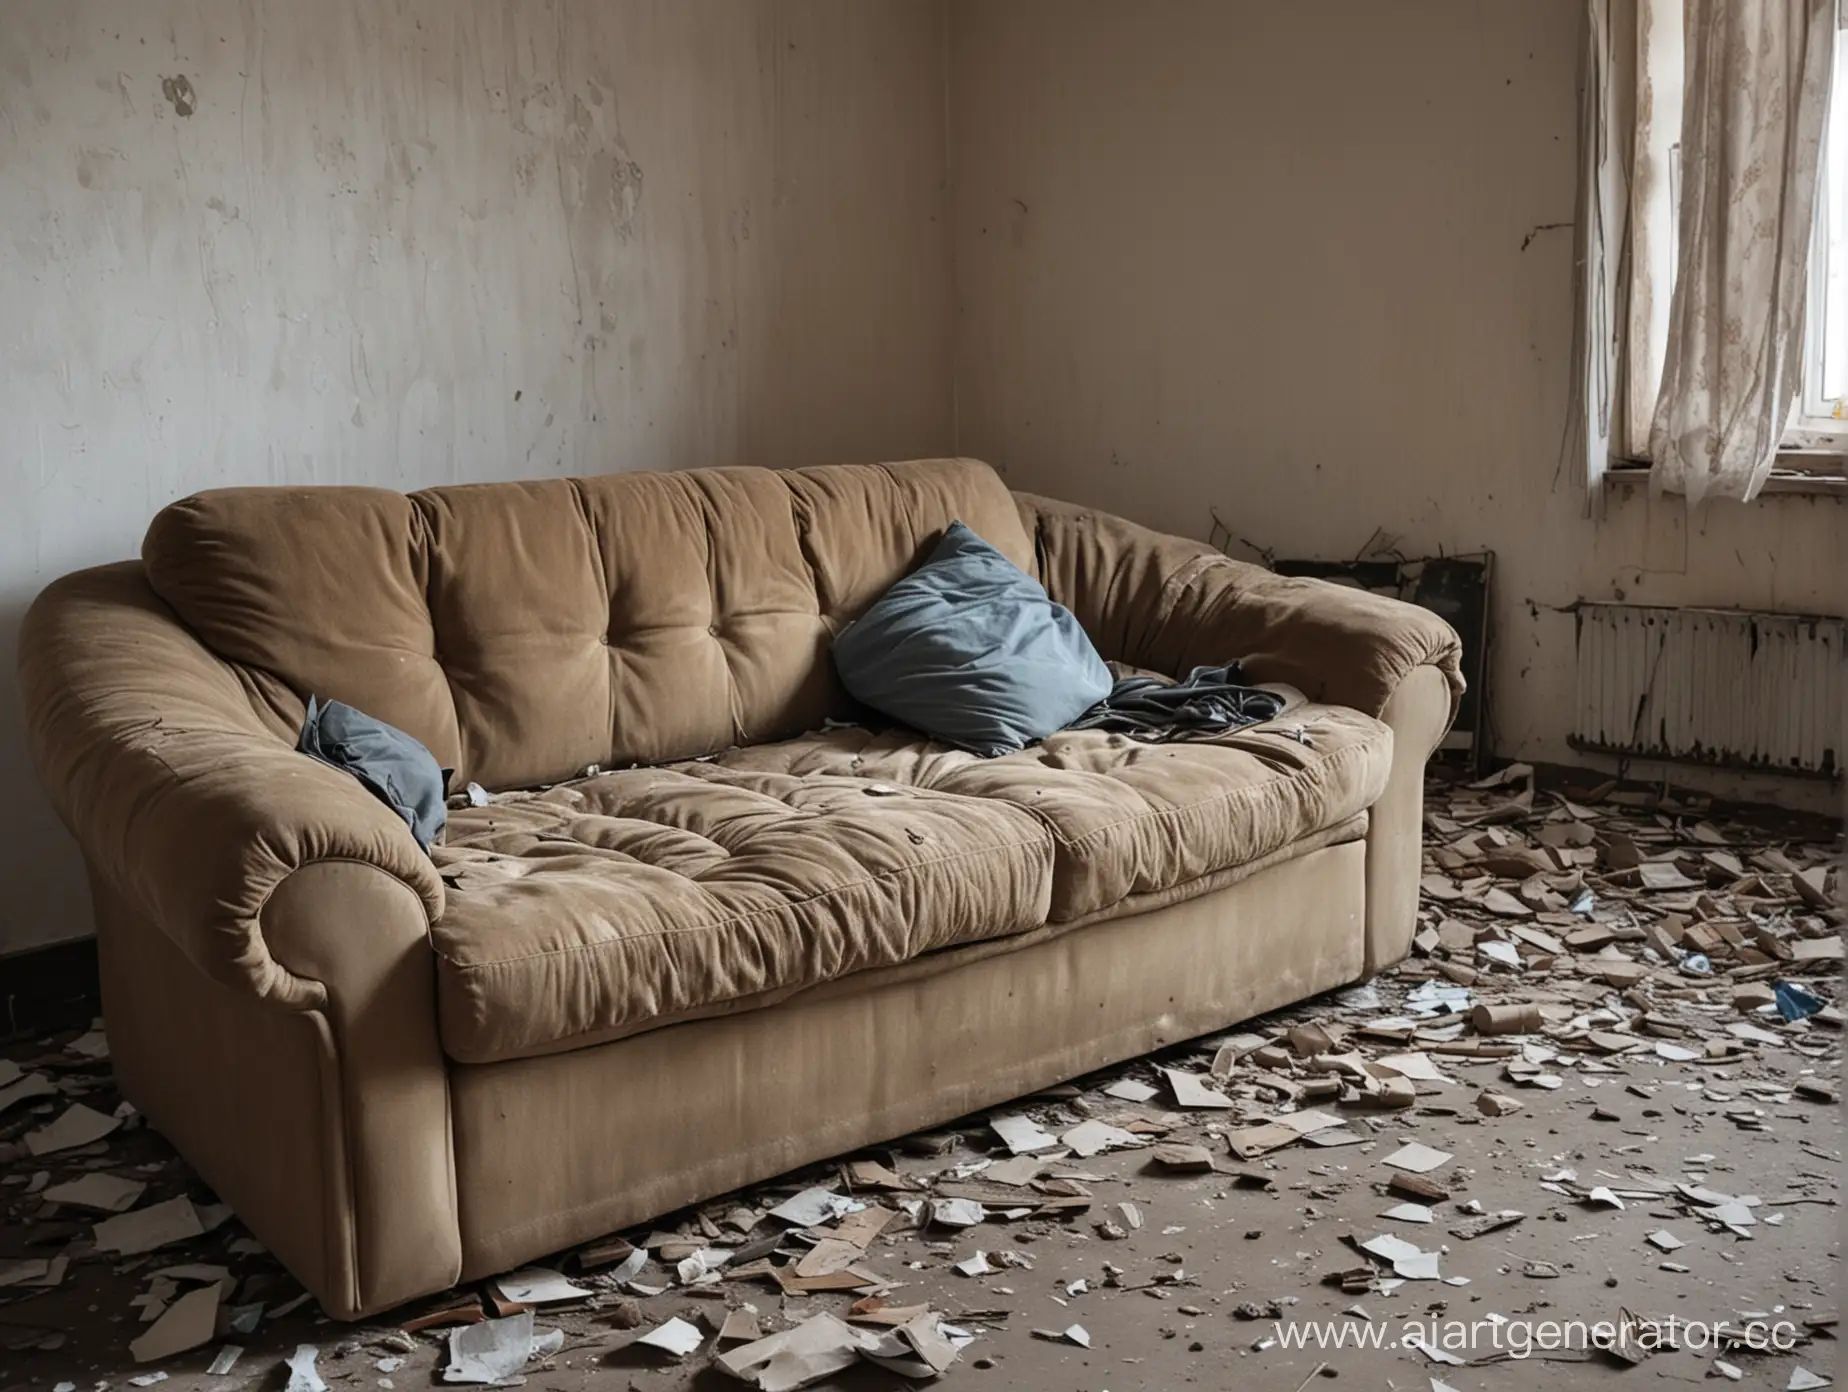 Desolate-Khrushchyovka-Interior-Abandoned-Sofa-in-a-Dismal-Setting